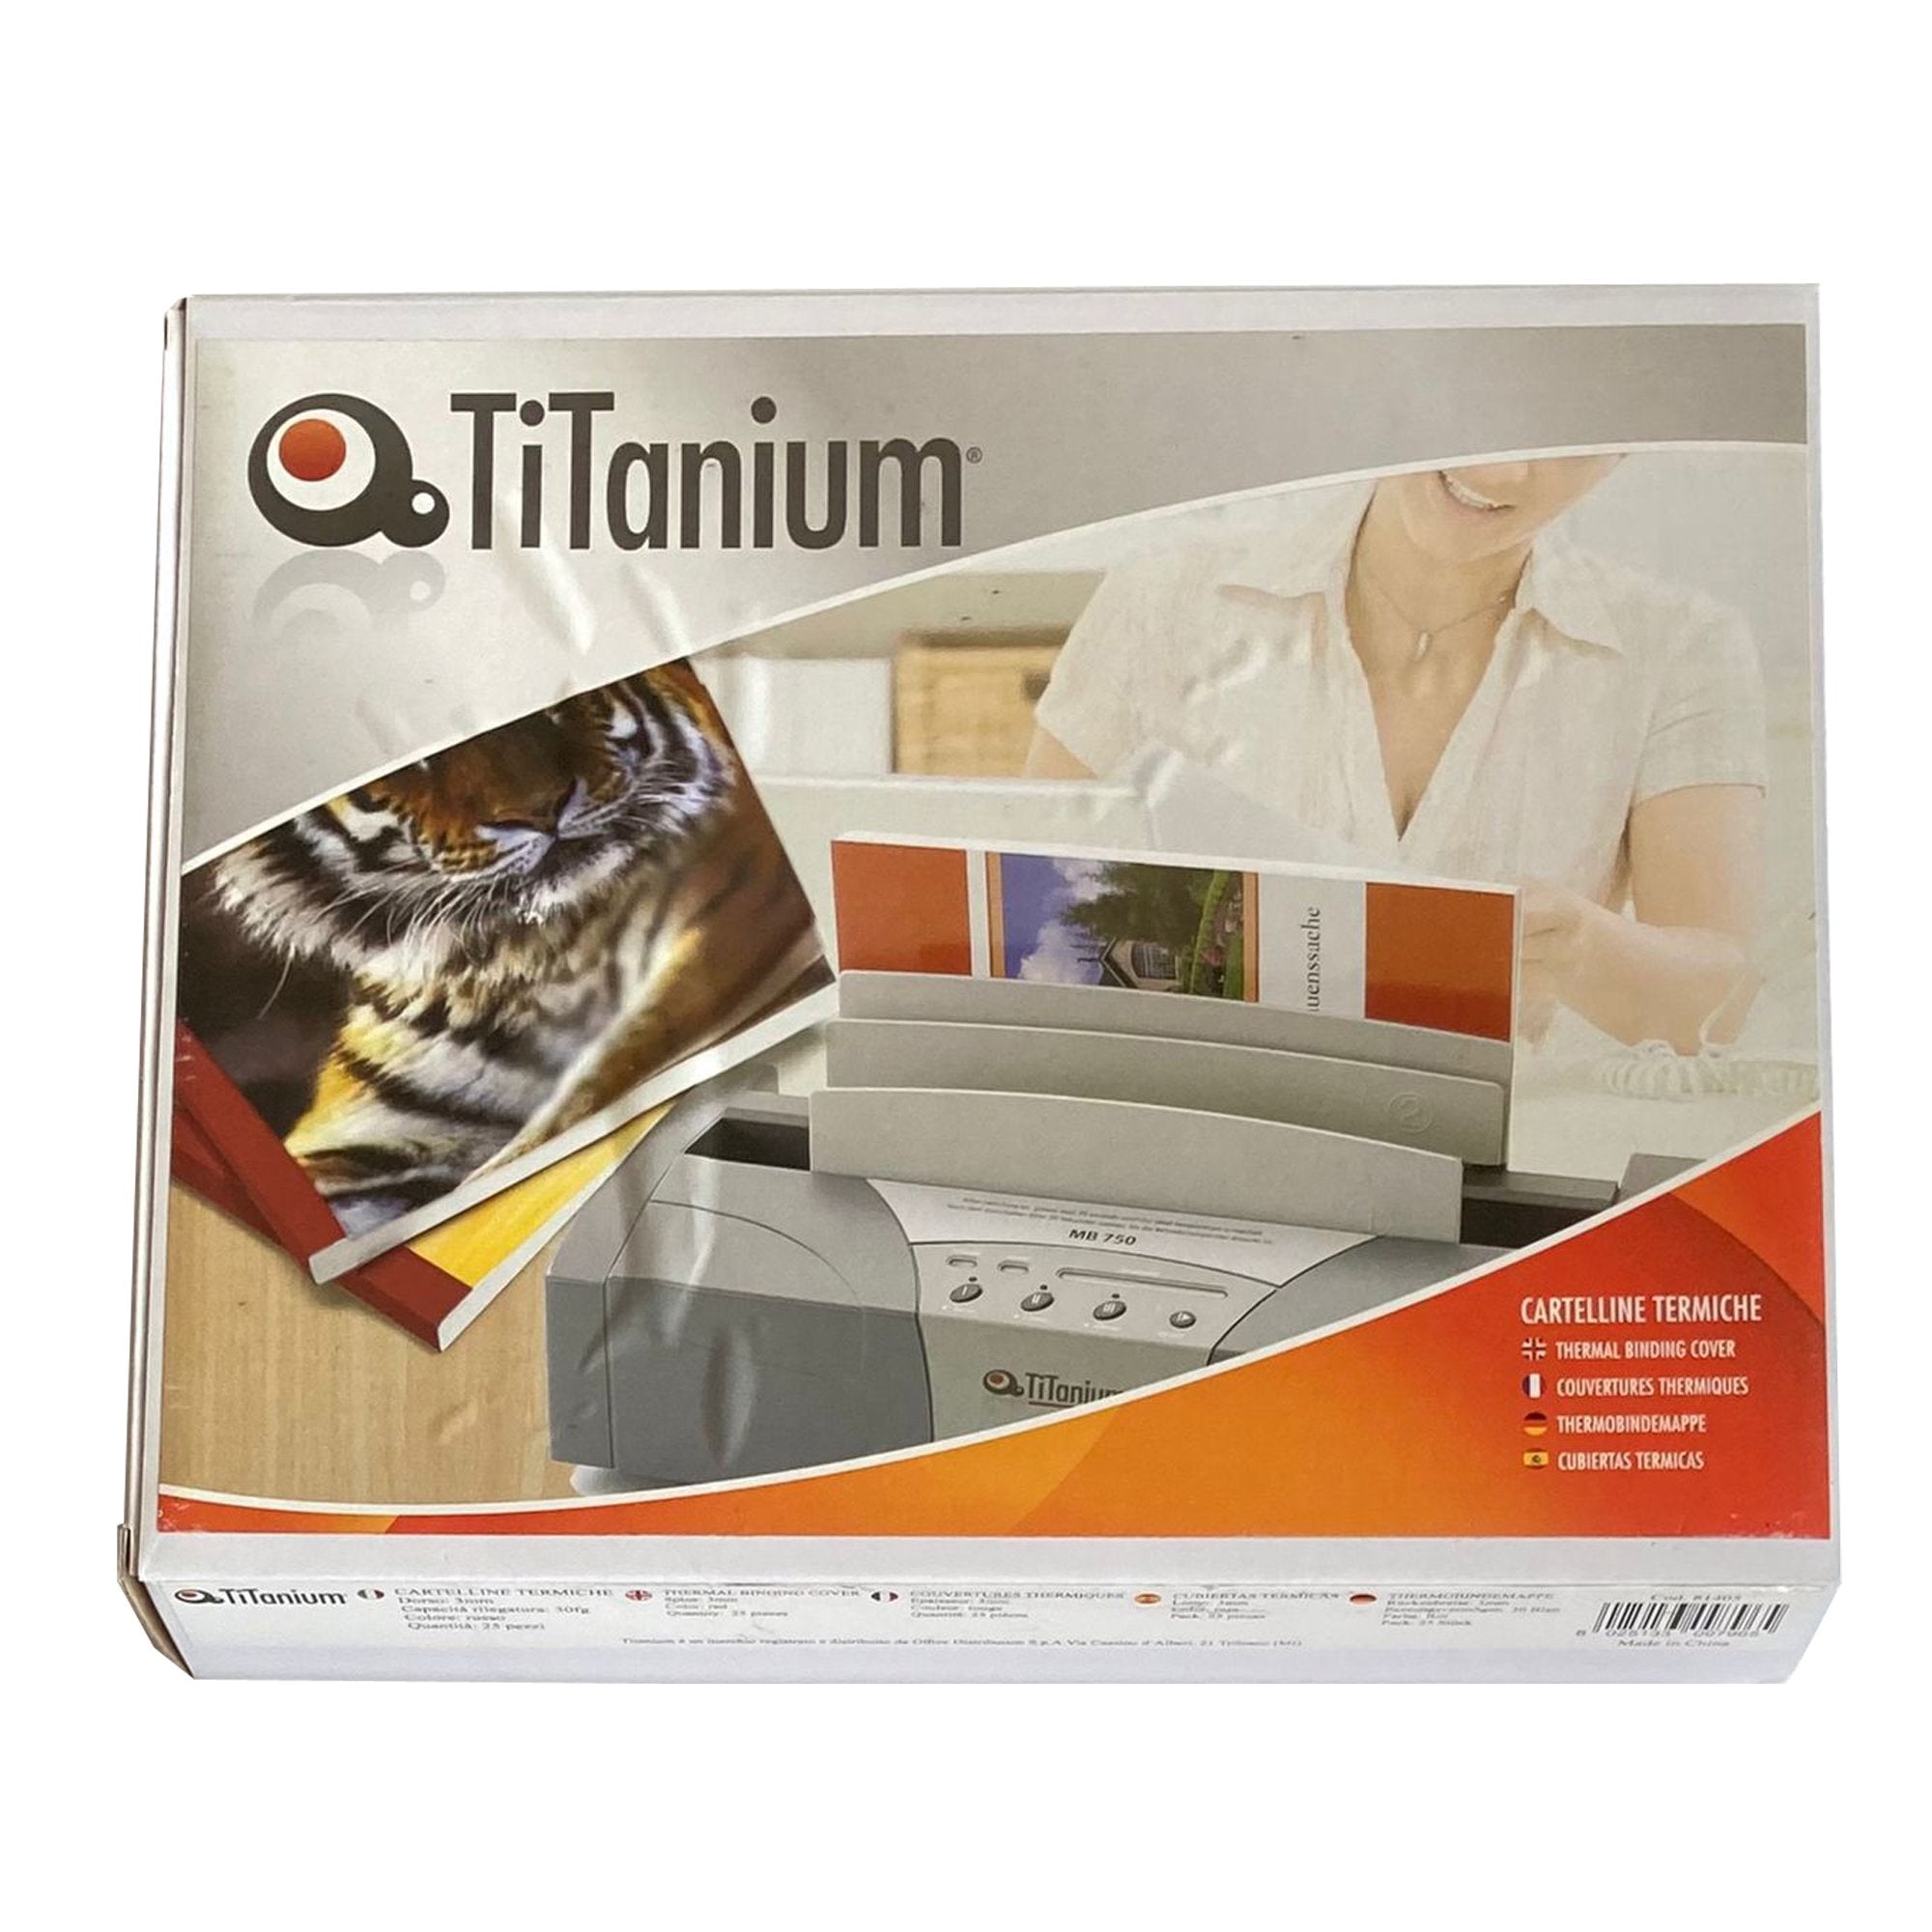 titanium-25-cartelline-termiche-3mm-rosso-grain